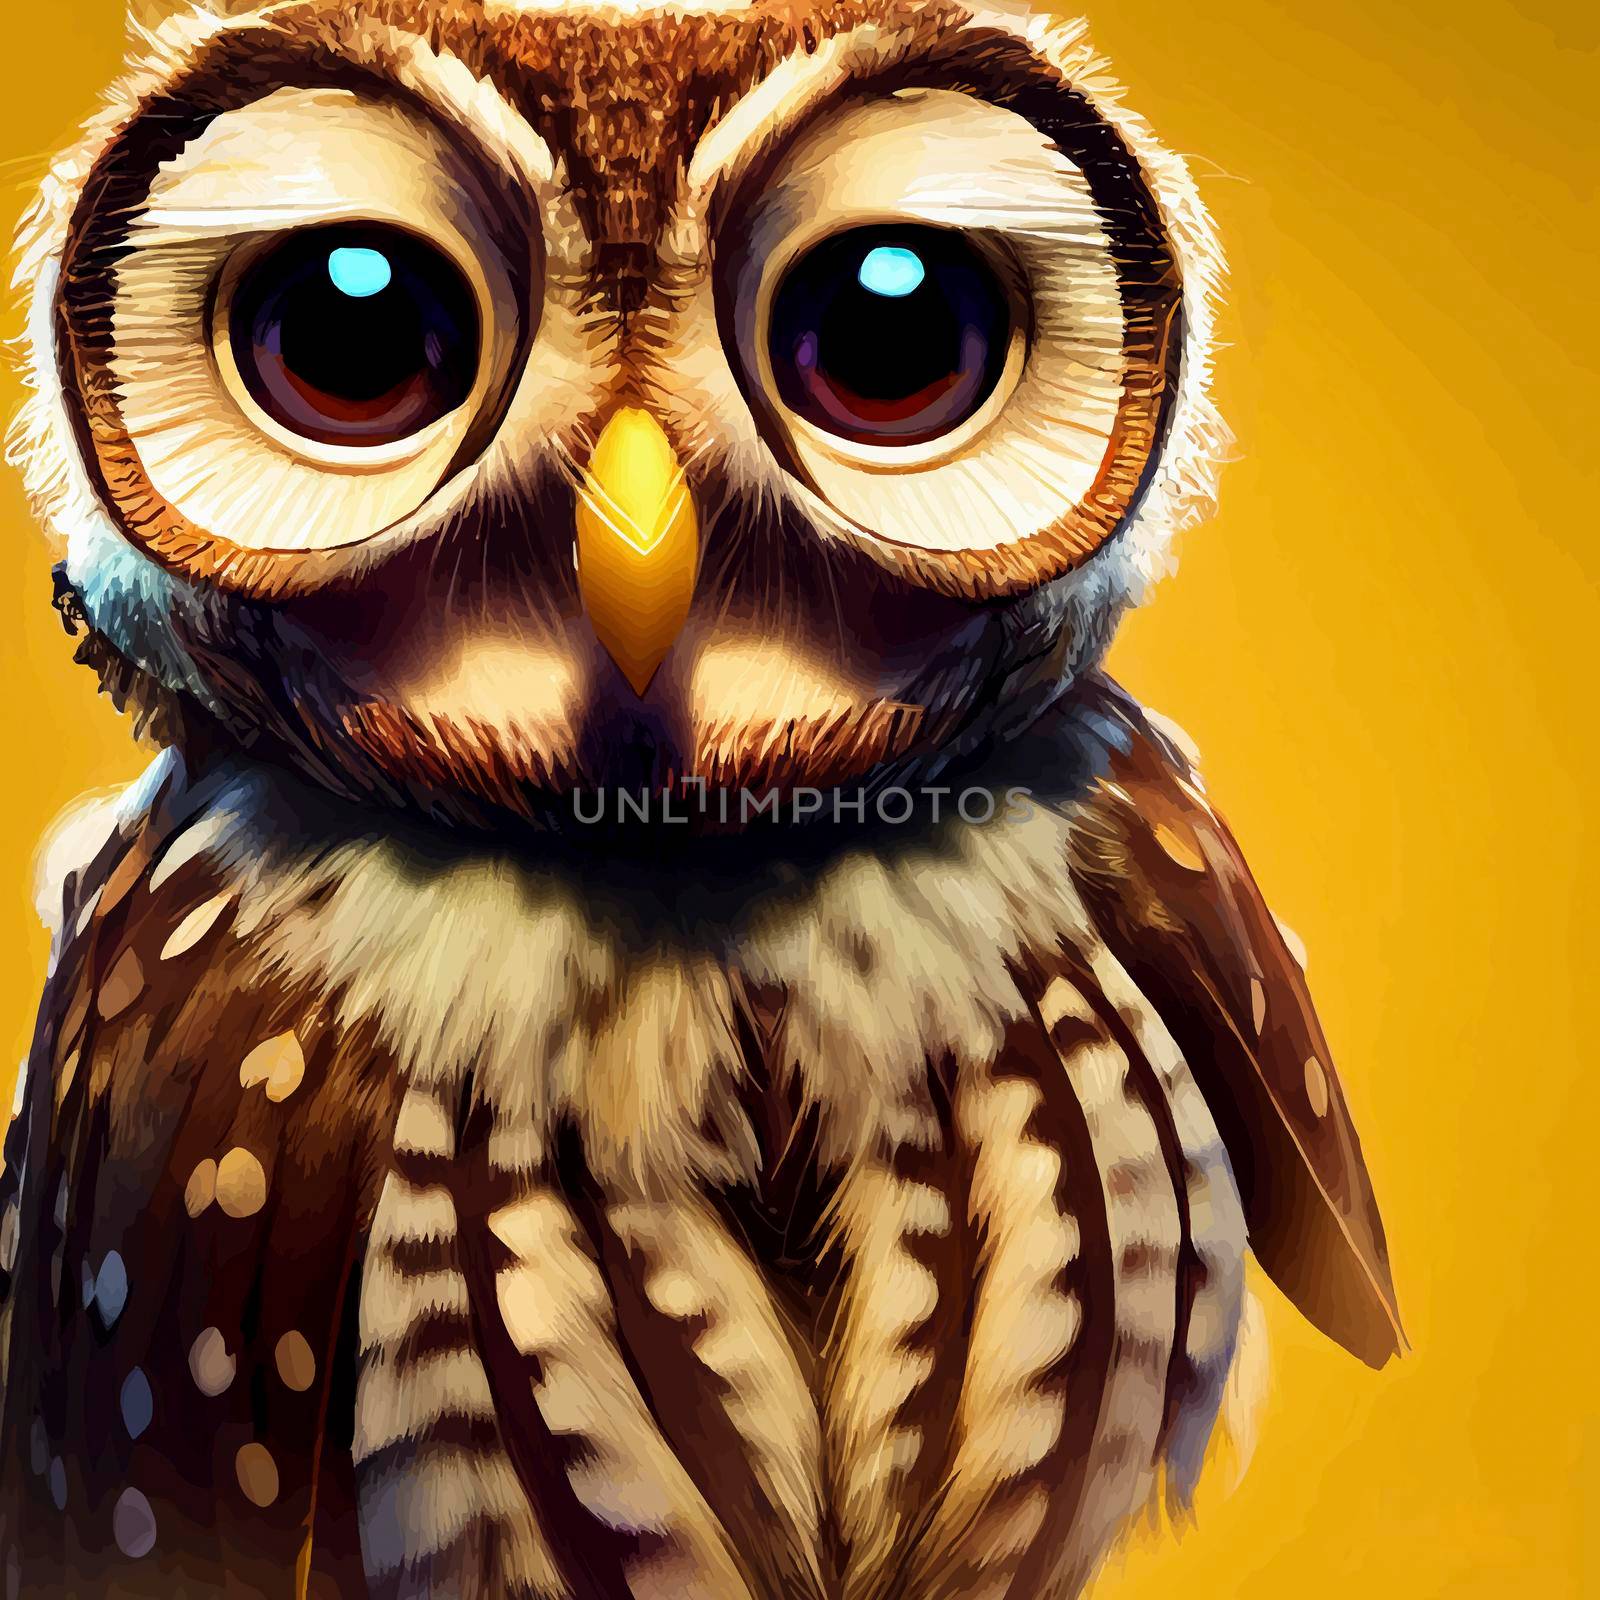 animated illustration of a cute owl, animated owl portrait by JpRamos